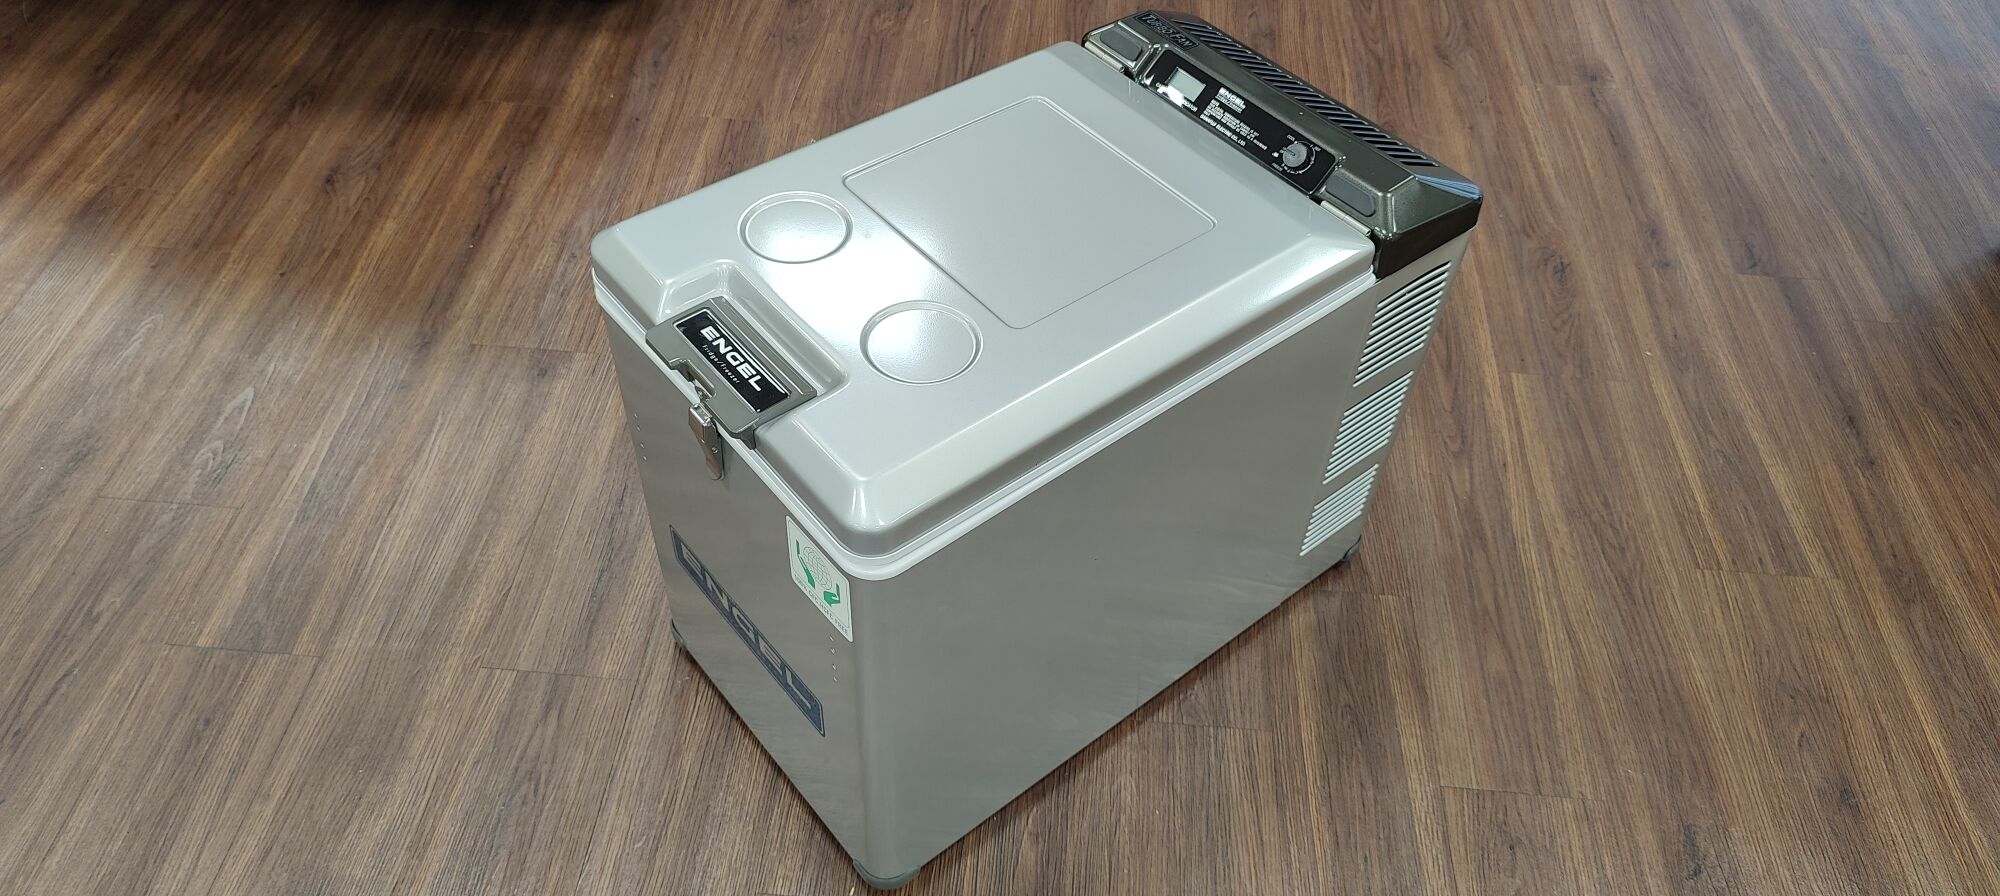 Engel MT 45 FS Kompressorkühlbox ++ B-Ware-Rückläufer #11.23/1 ++ Kompressor  Kühlbox 40 Liter Inhalt